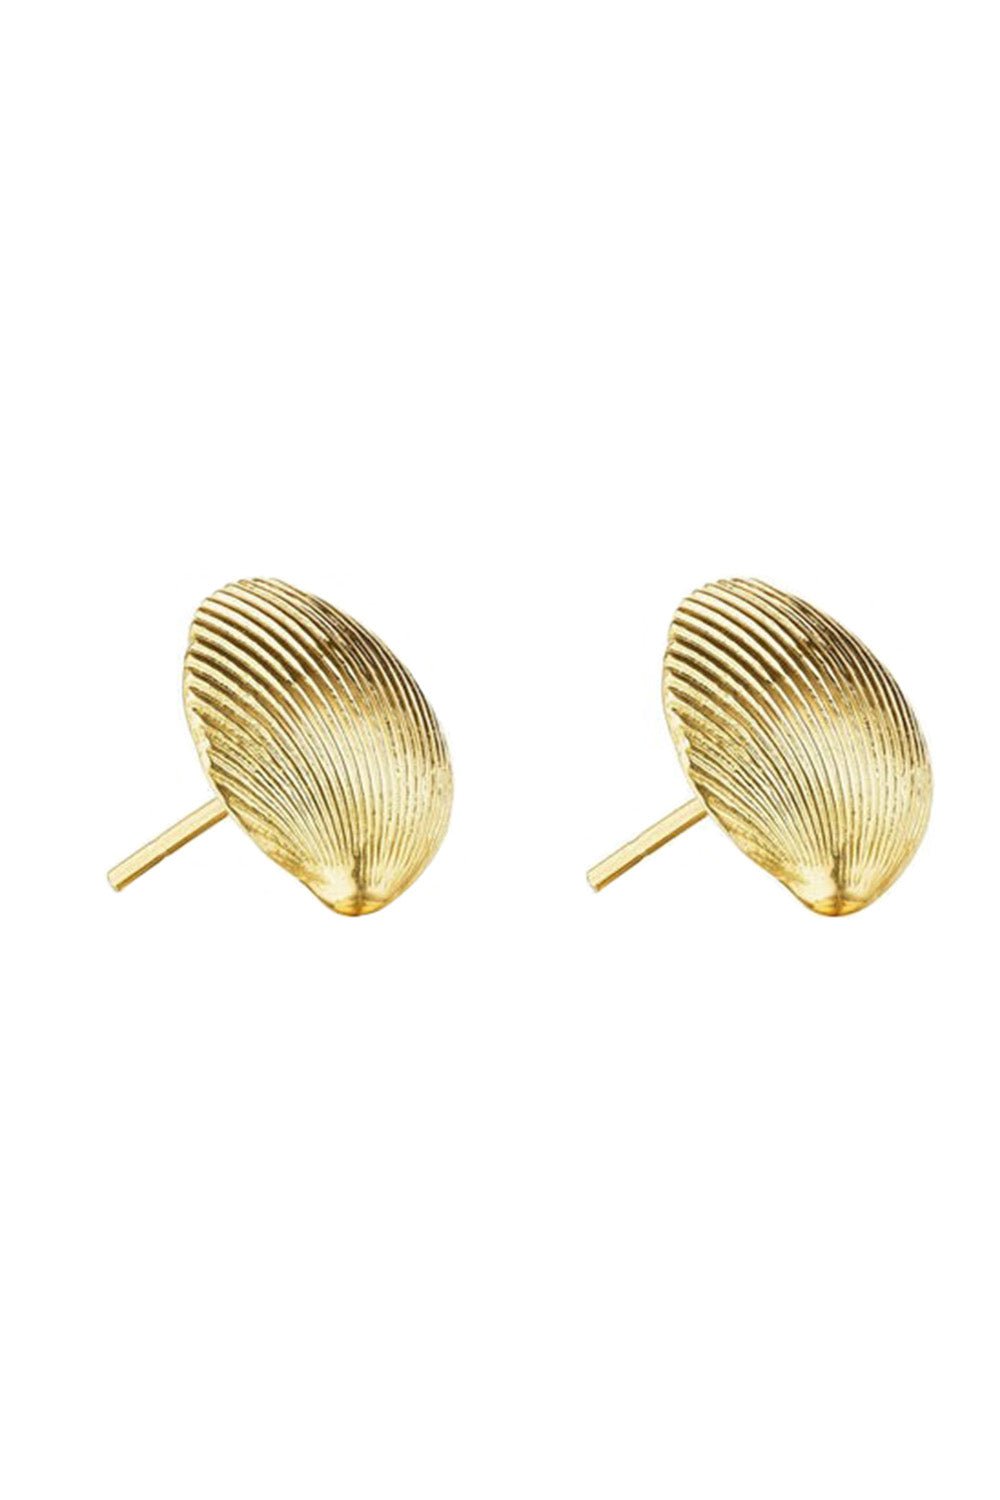 CADAR-Small Shell Stud Earrings-YELLOW GOLD